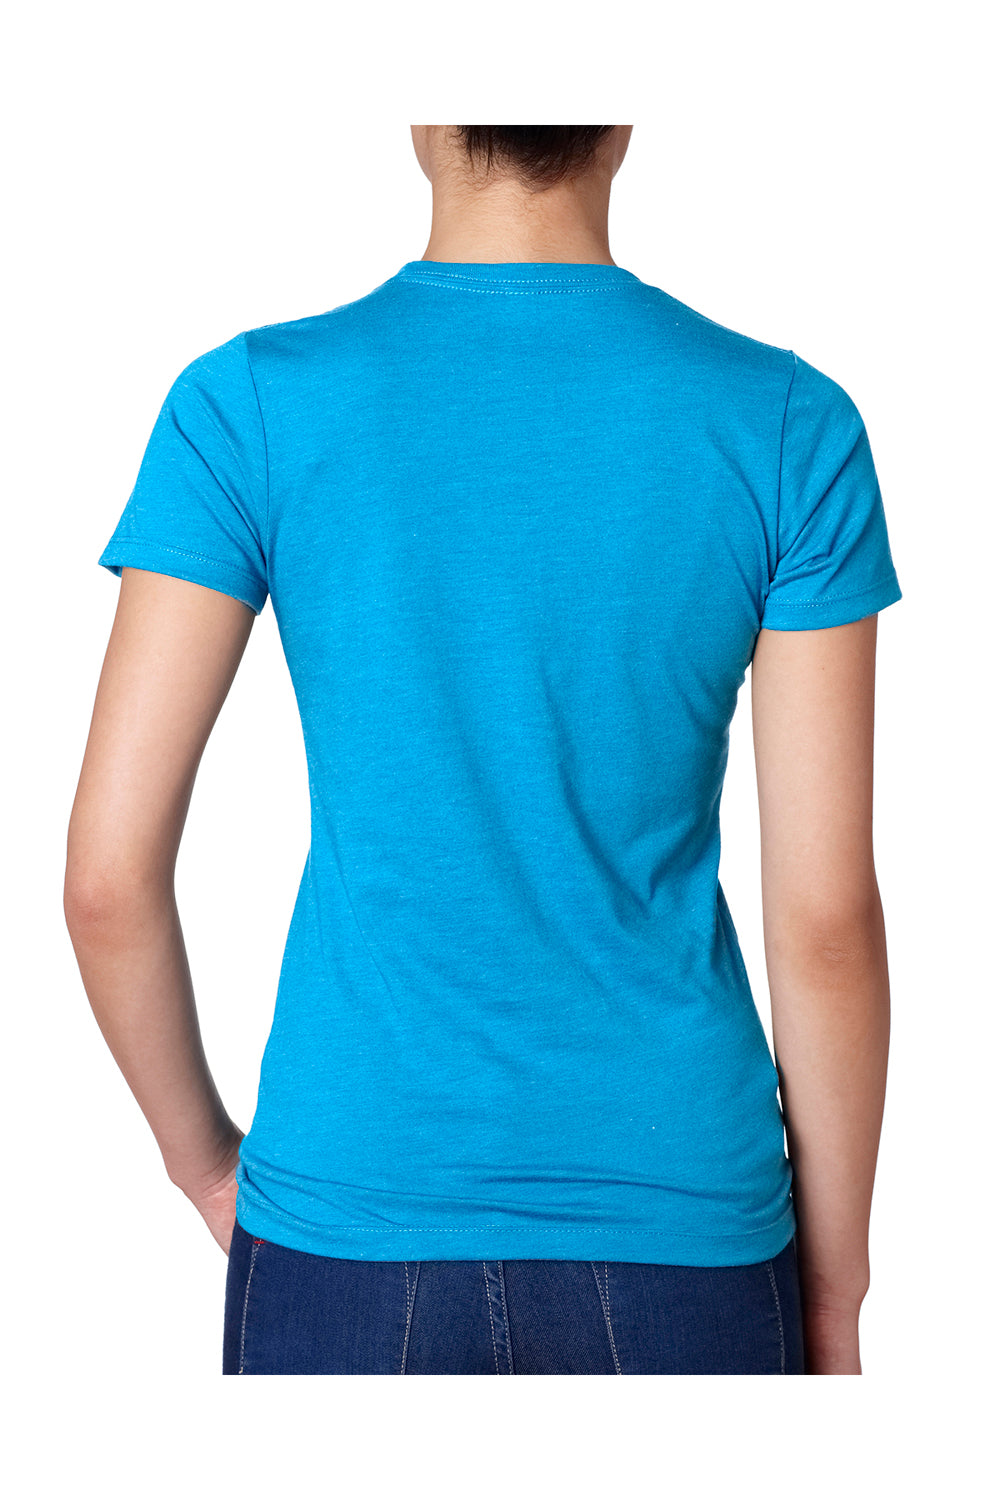 Next Level 6610 Womens CVC Jersey Short Sleeve Crewneck T-Shirt Turquoise Blue Back